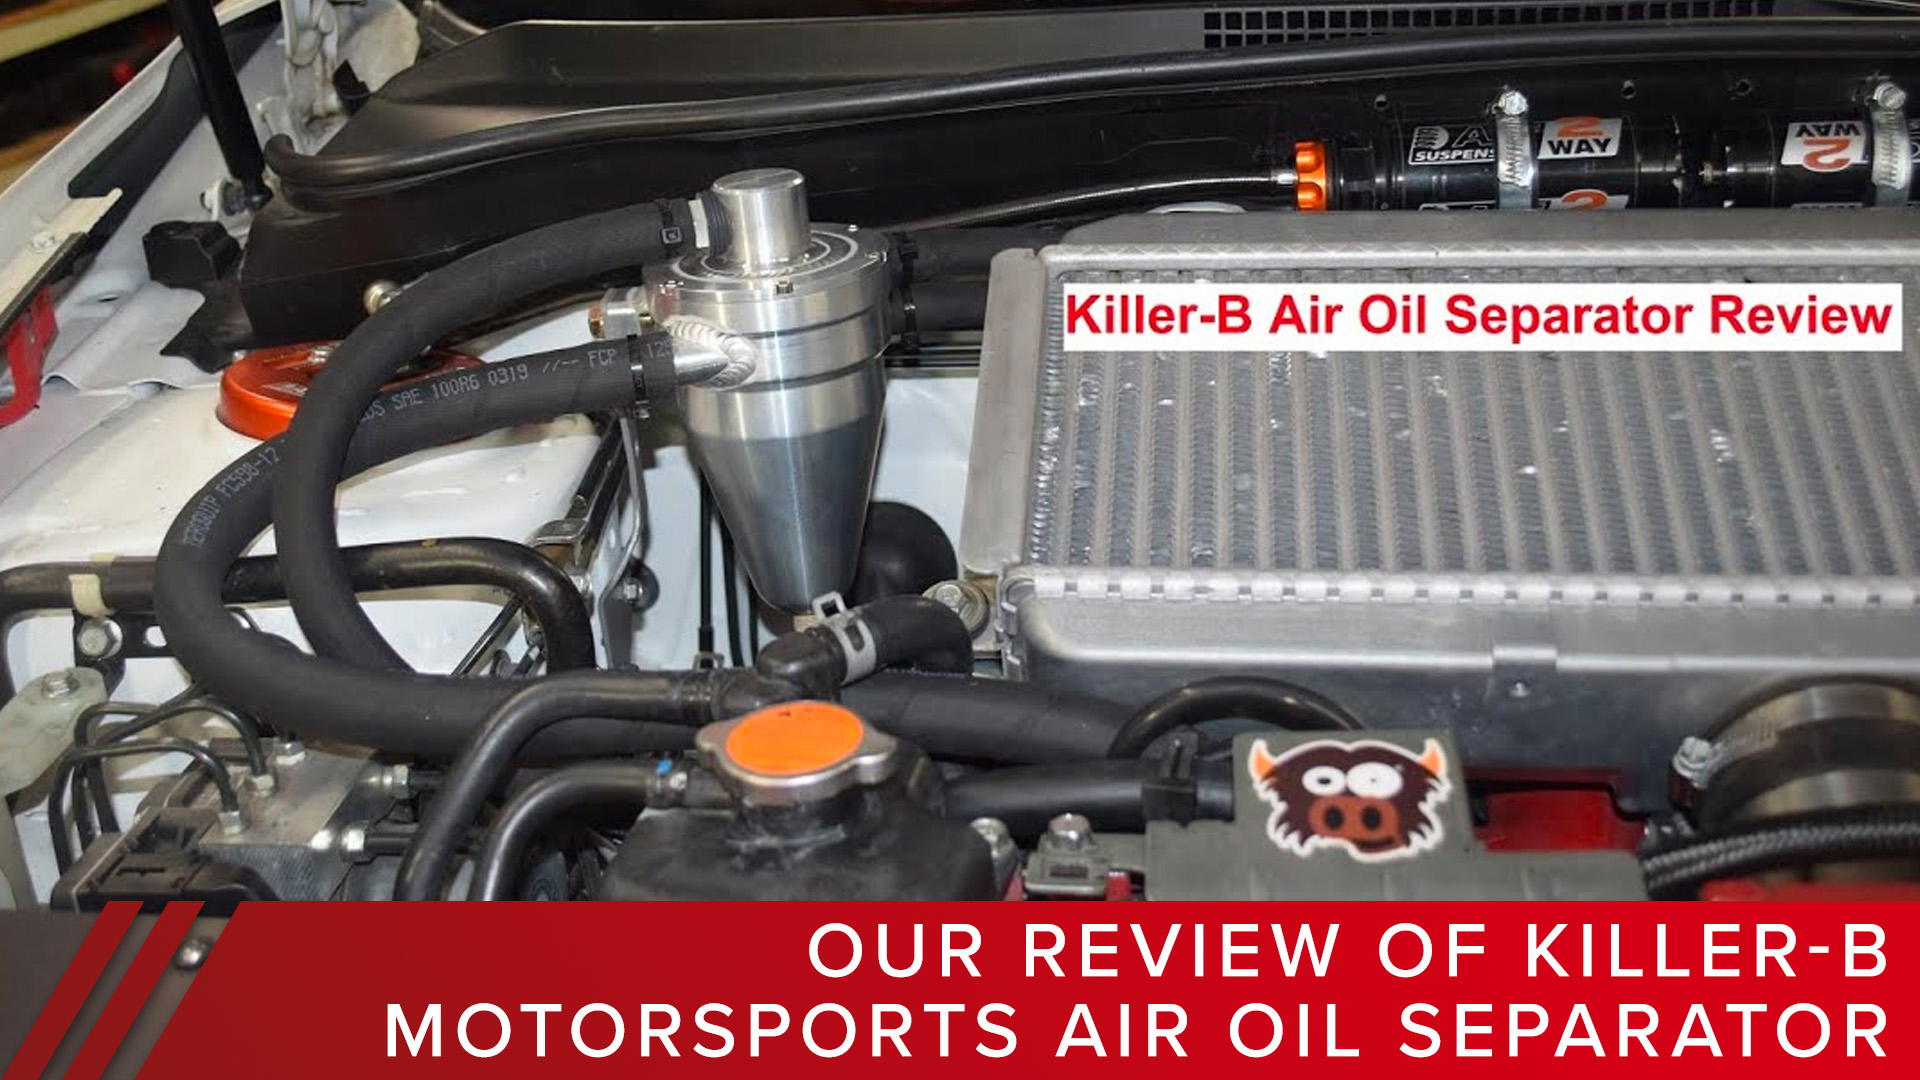 Our review of Killer-B Motorsports Air Oil Separator